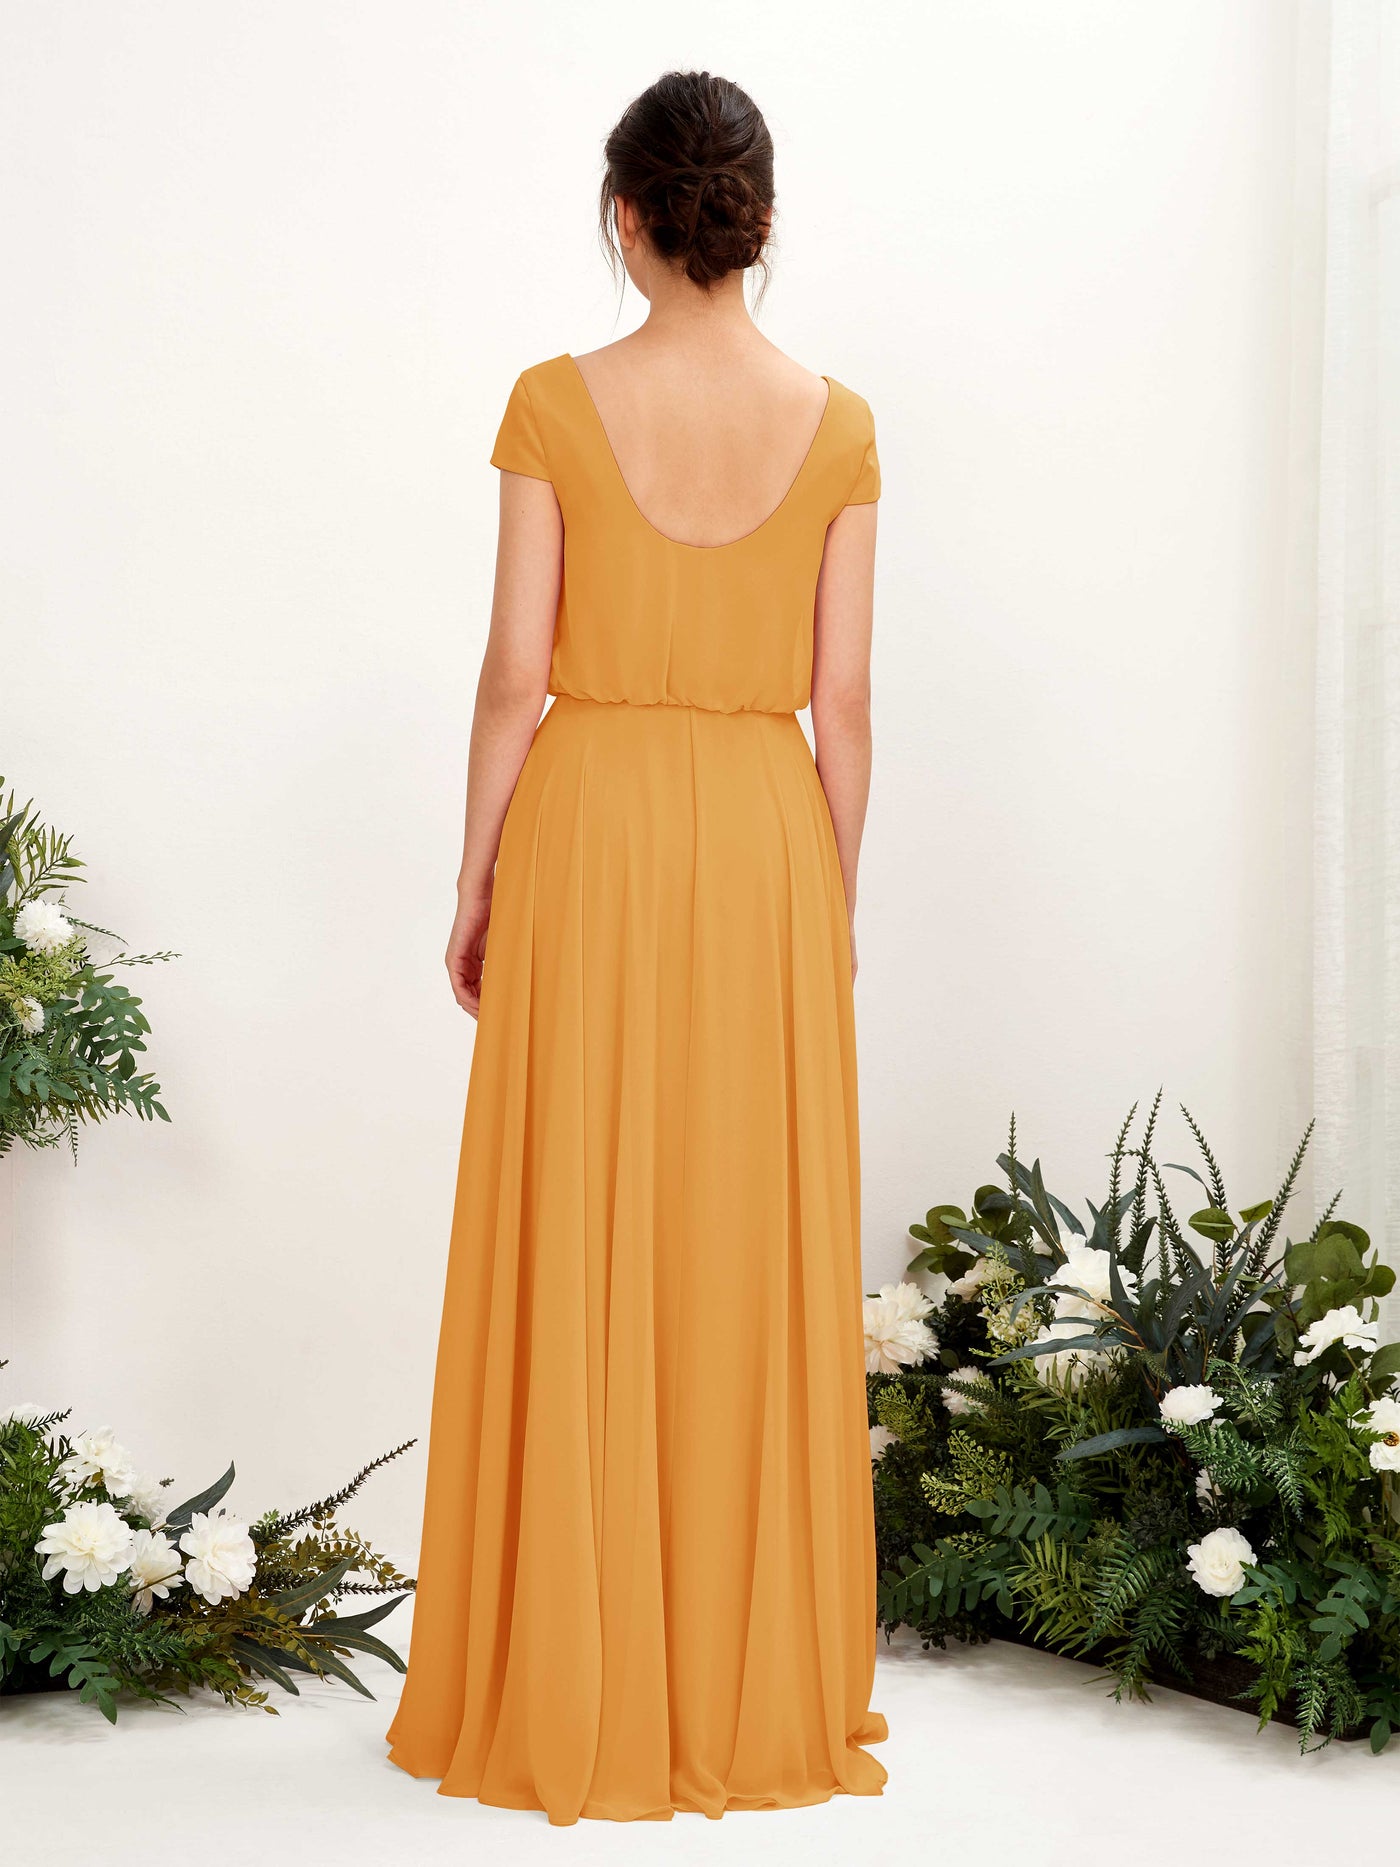 Mango Bridesmaid Dresses Bridesmaid Dress A-line Chiffon V-neck Full Length Short Sleeves Wedding Party Dress (81221802)#color_mango